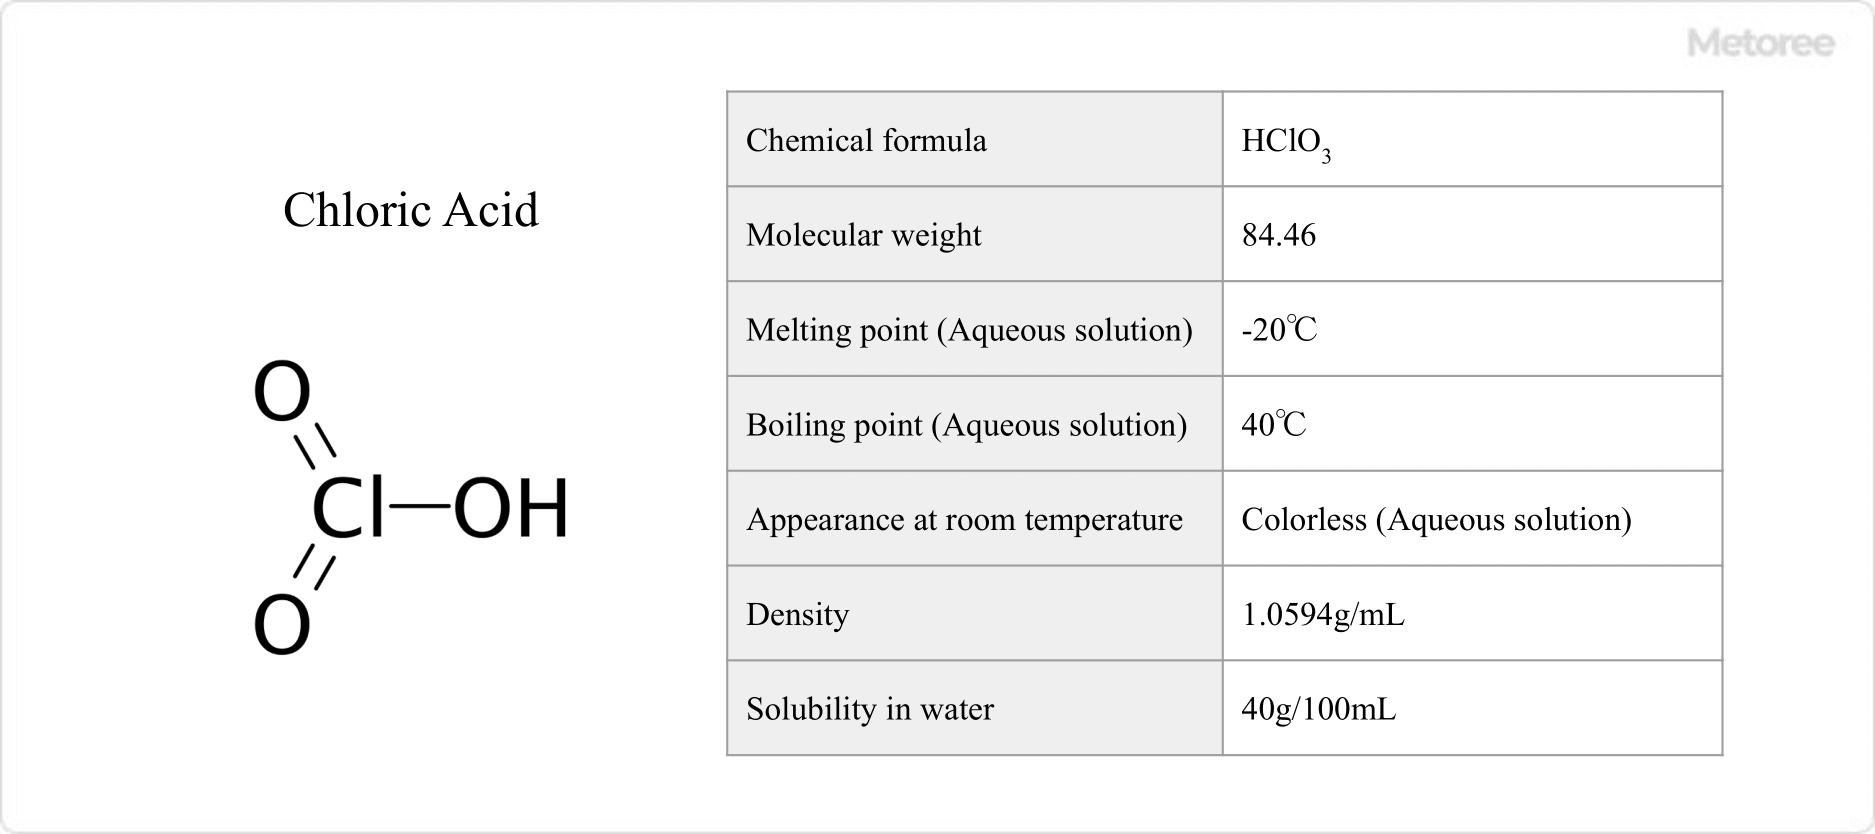 Figure 1. Basic information on chloric acid